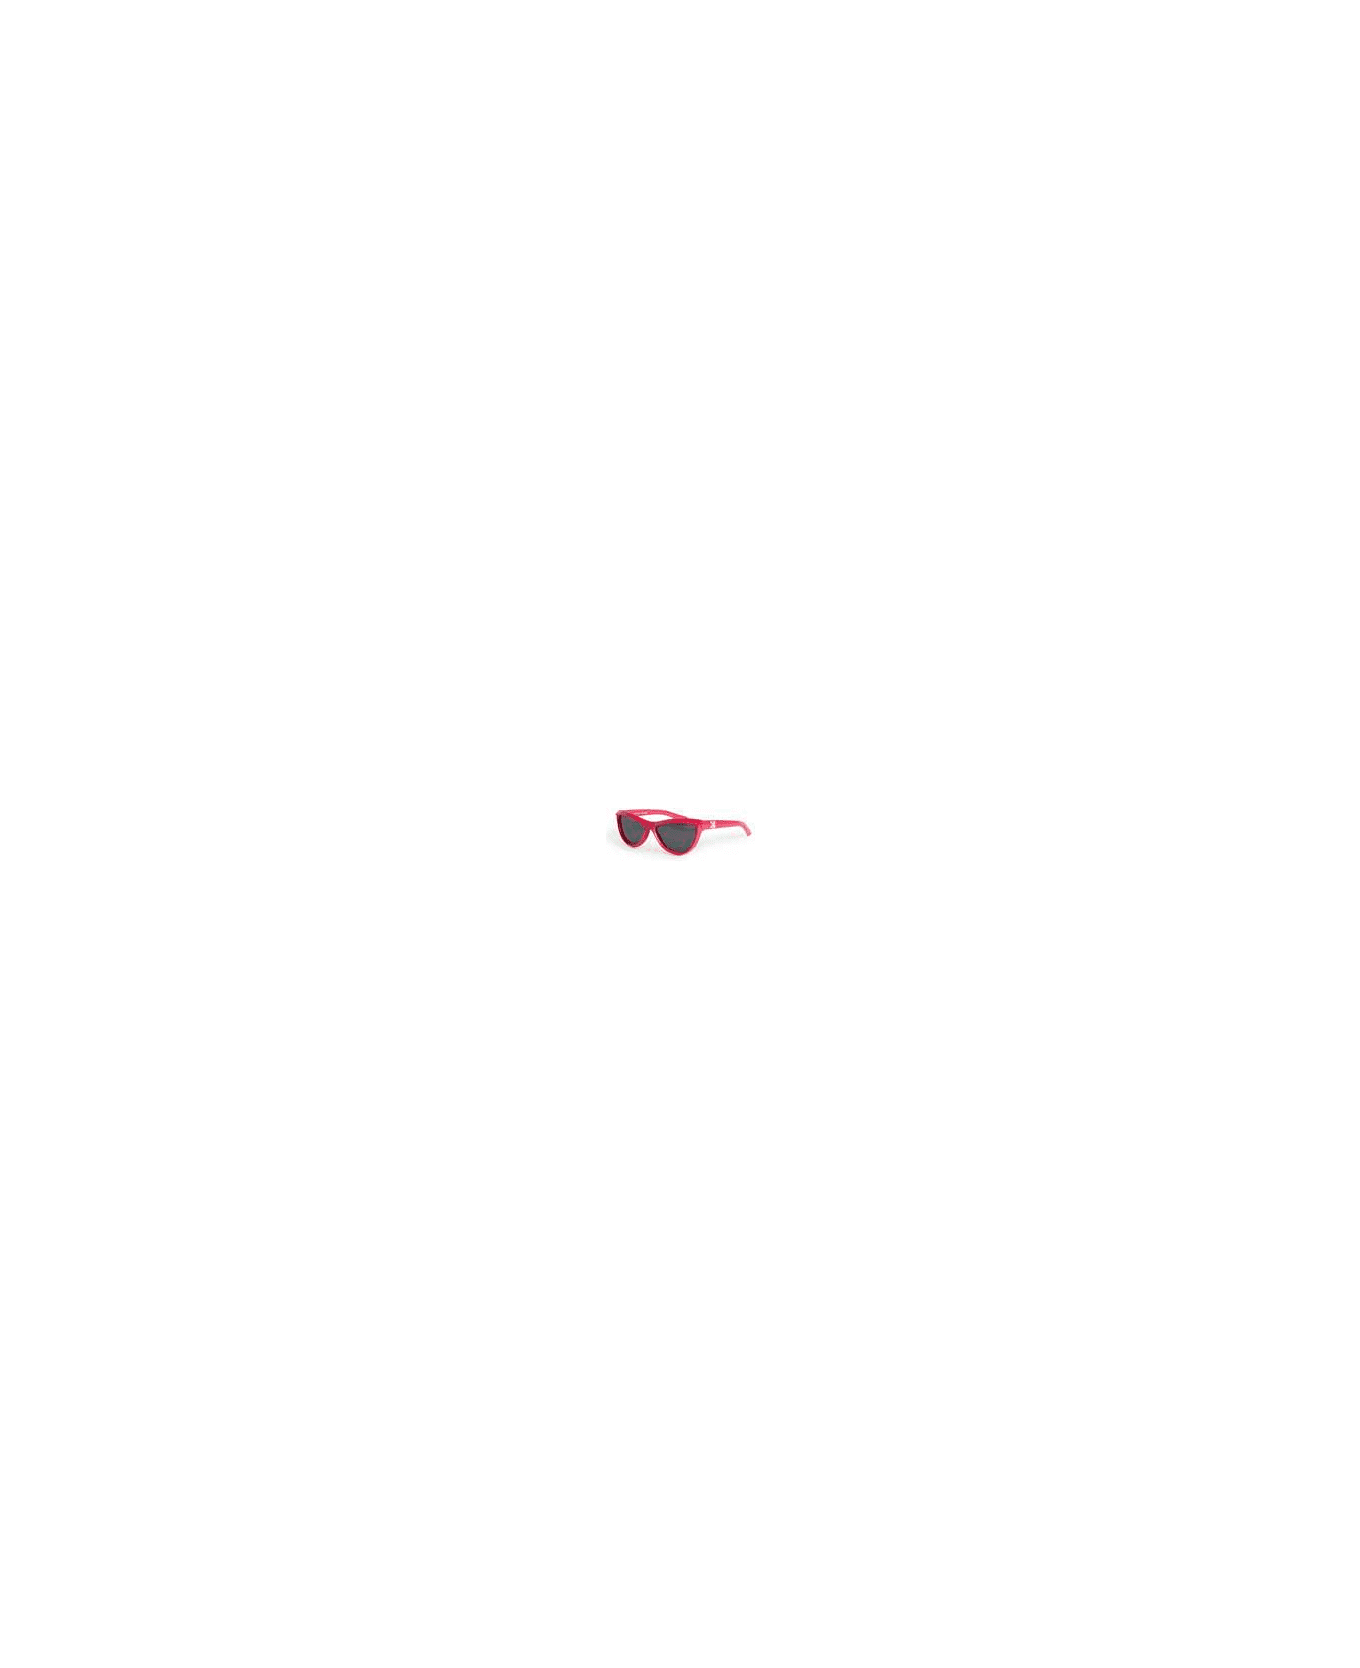 Off-White ATLANTA SUNGLASSES Sunglasses - Cherry サングラス